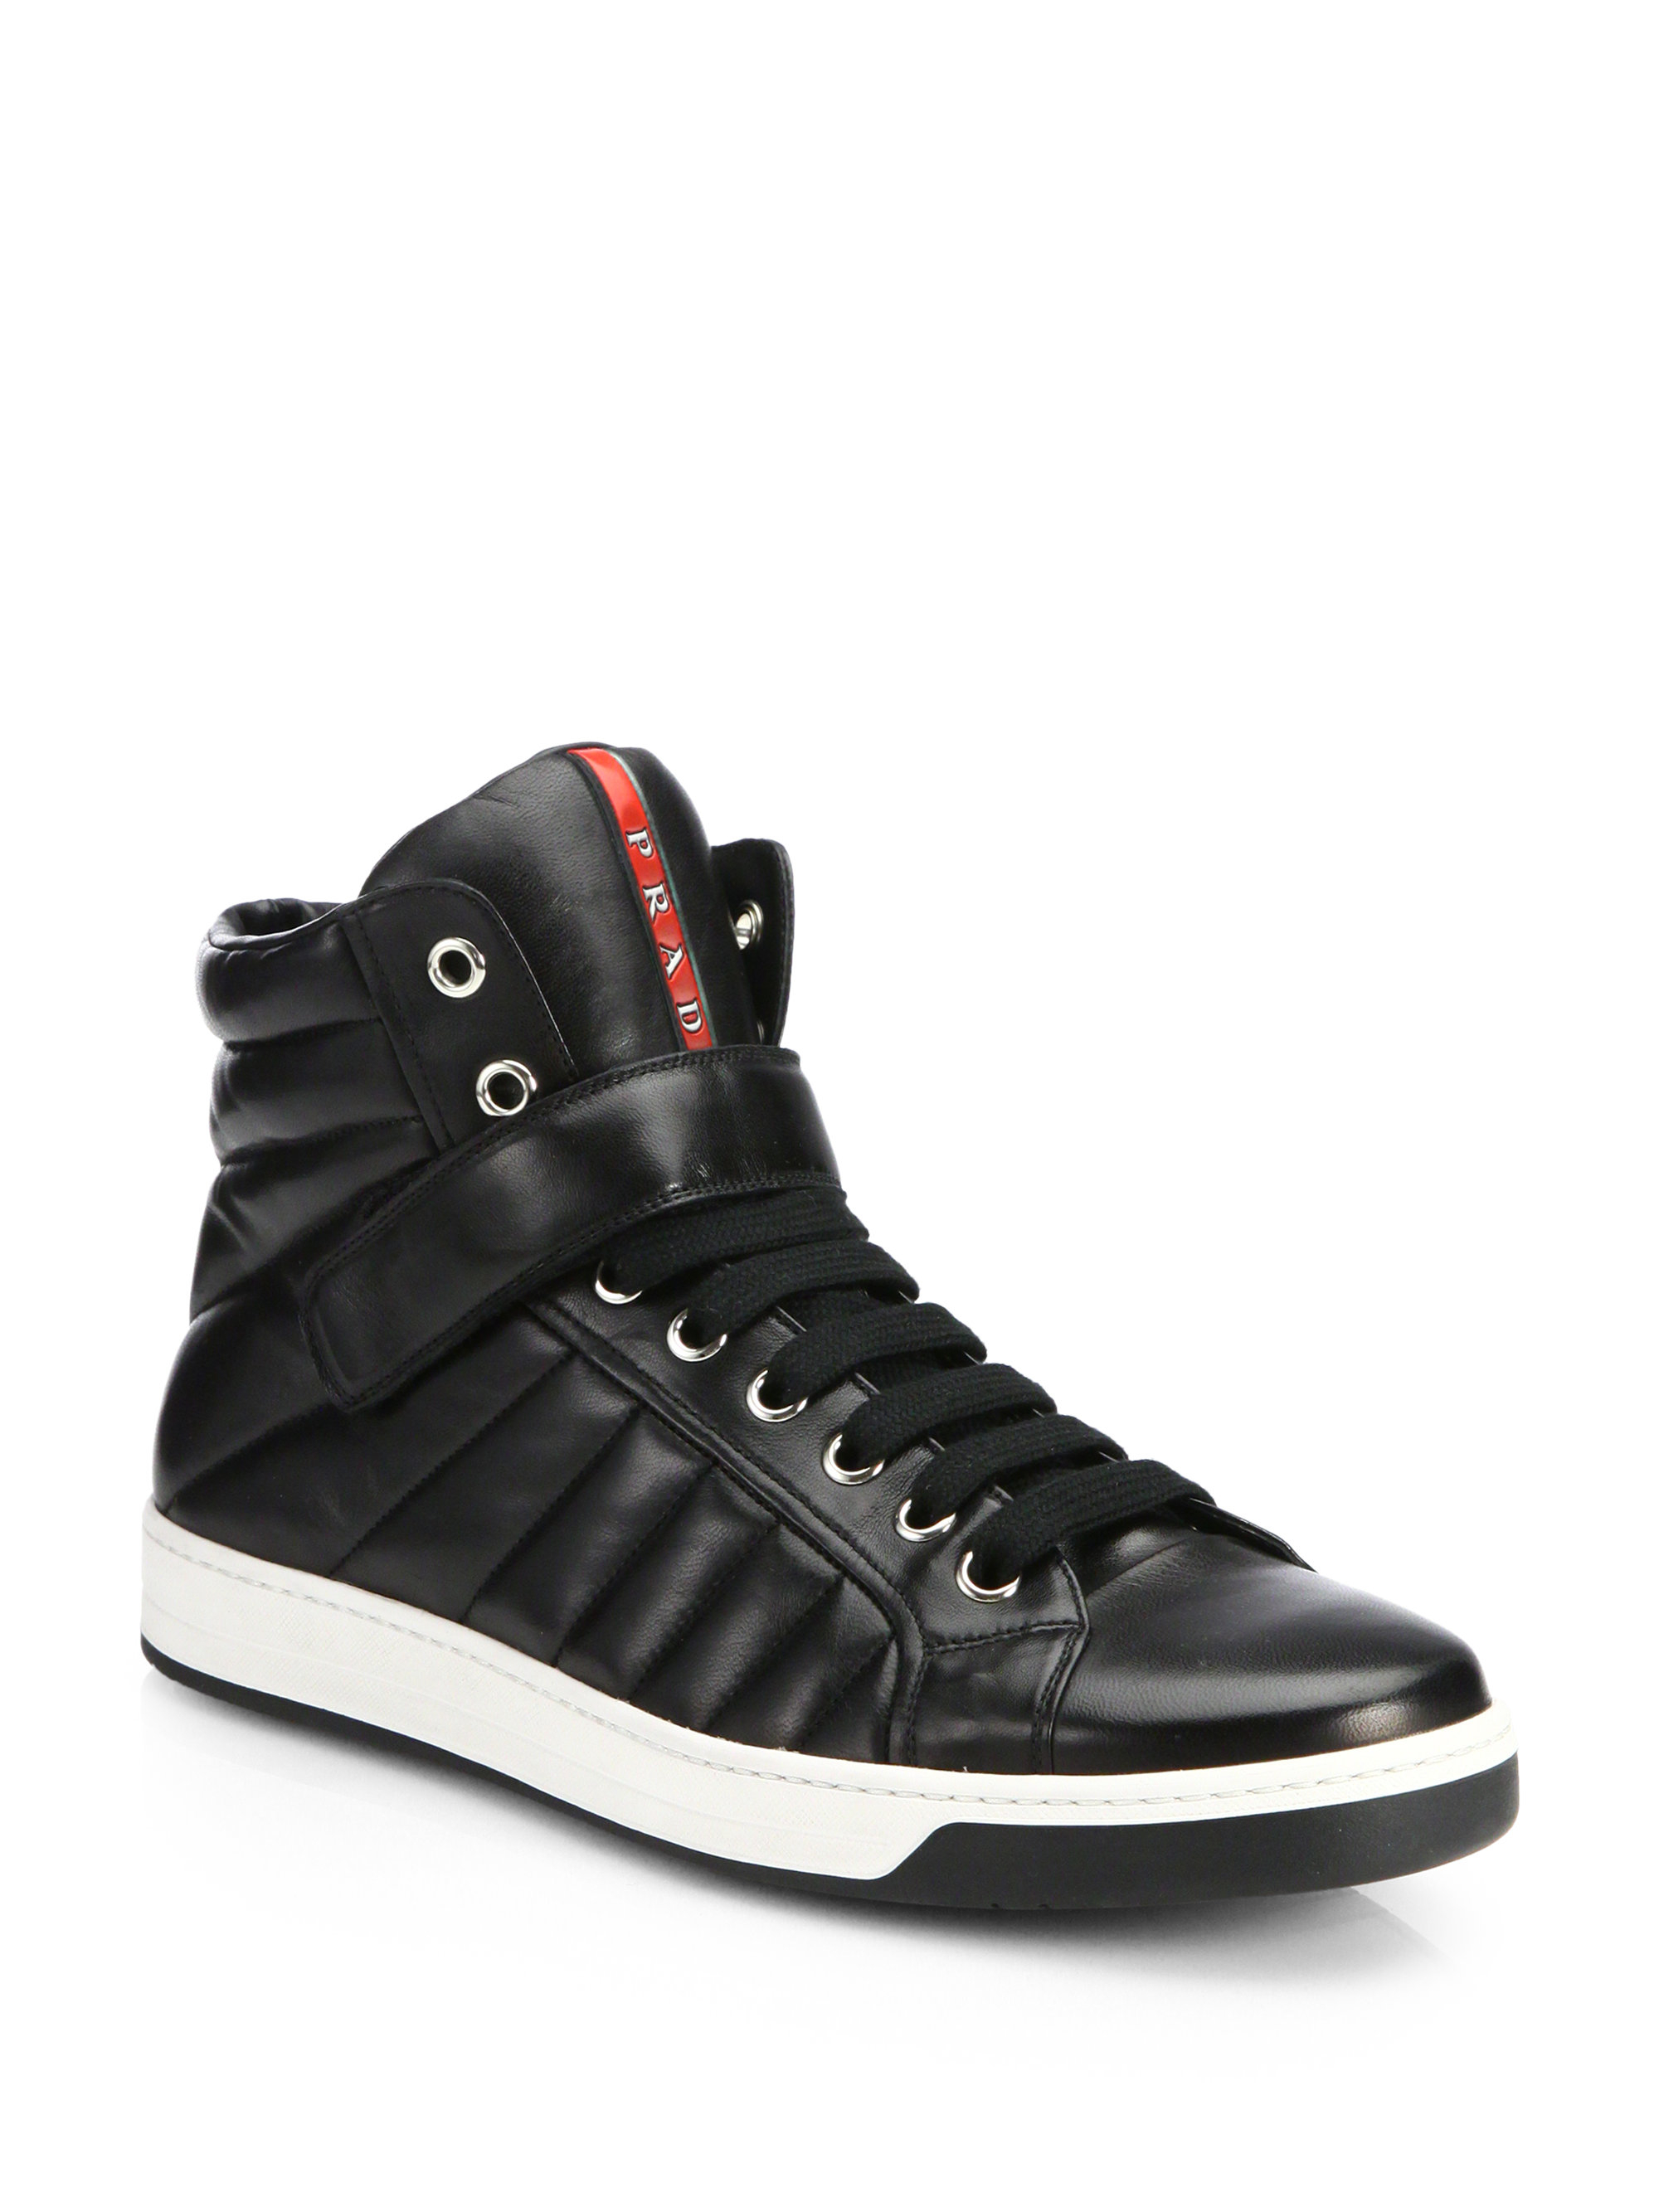 Lyst - Prada Nappa Leather High-top Sneakers in Black for Men